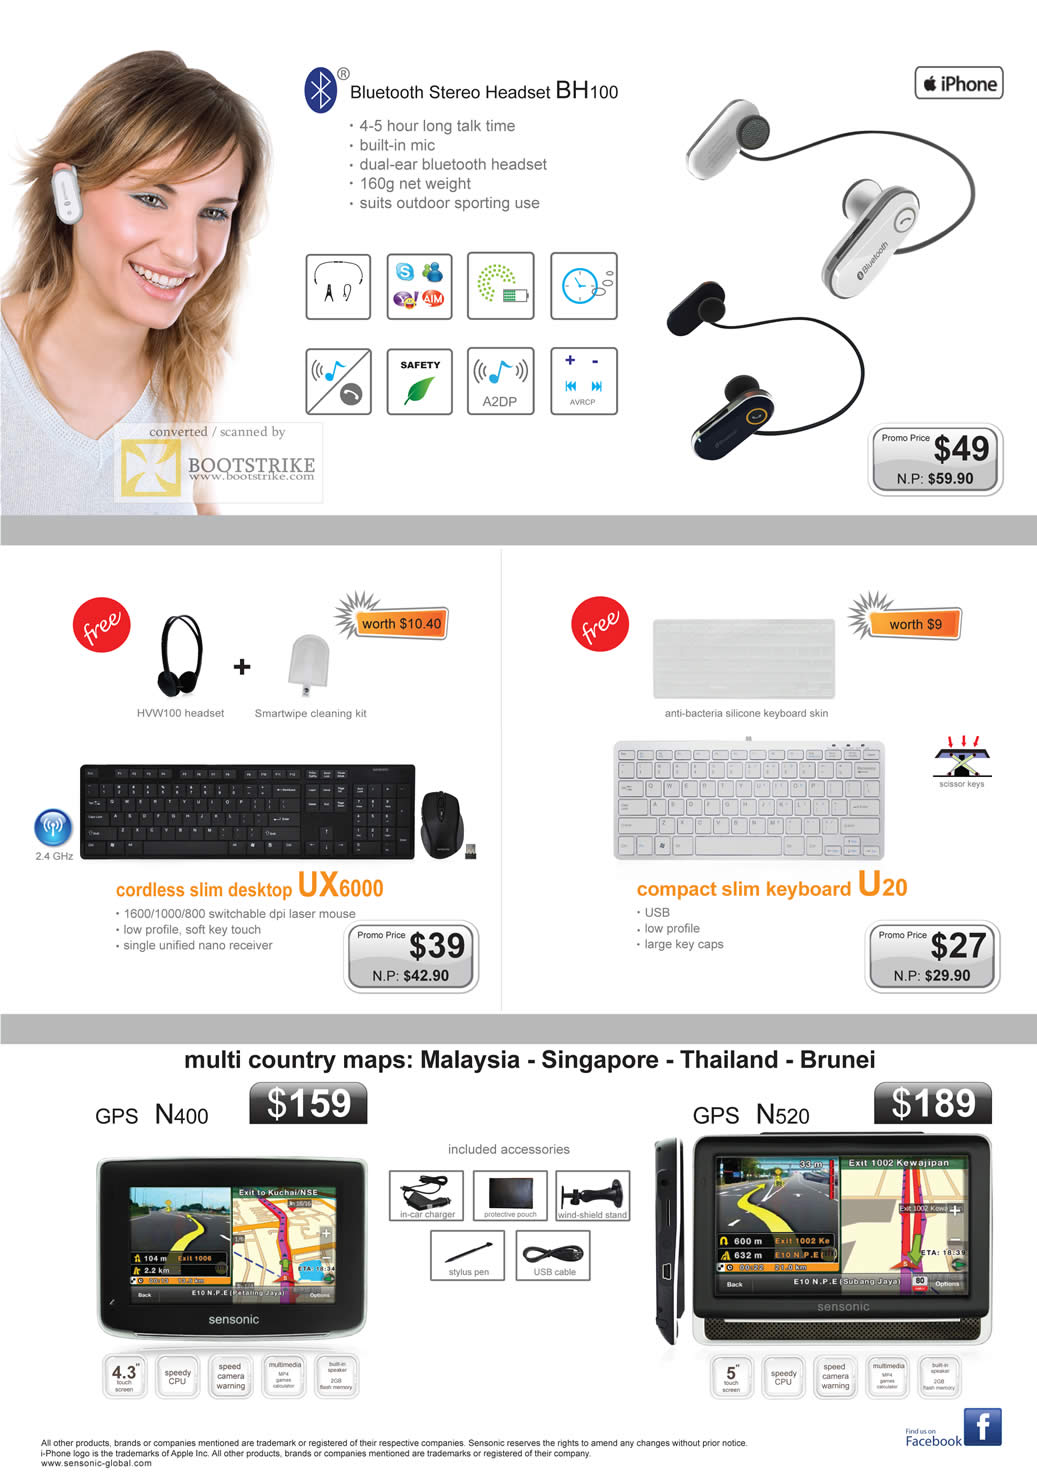 PC Show 2011 price list image brochure of Mclogic Sensonic Bluetooth Headset BH100 Keyboards UX6000 U20 GPS N400 N520